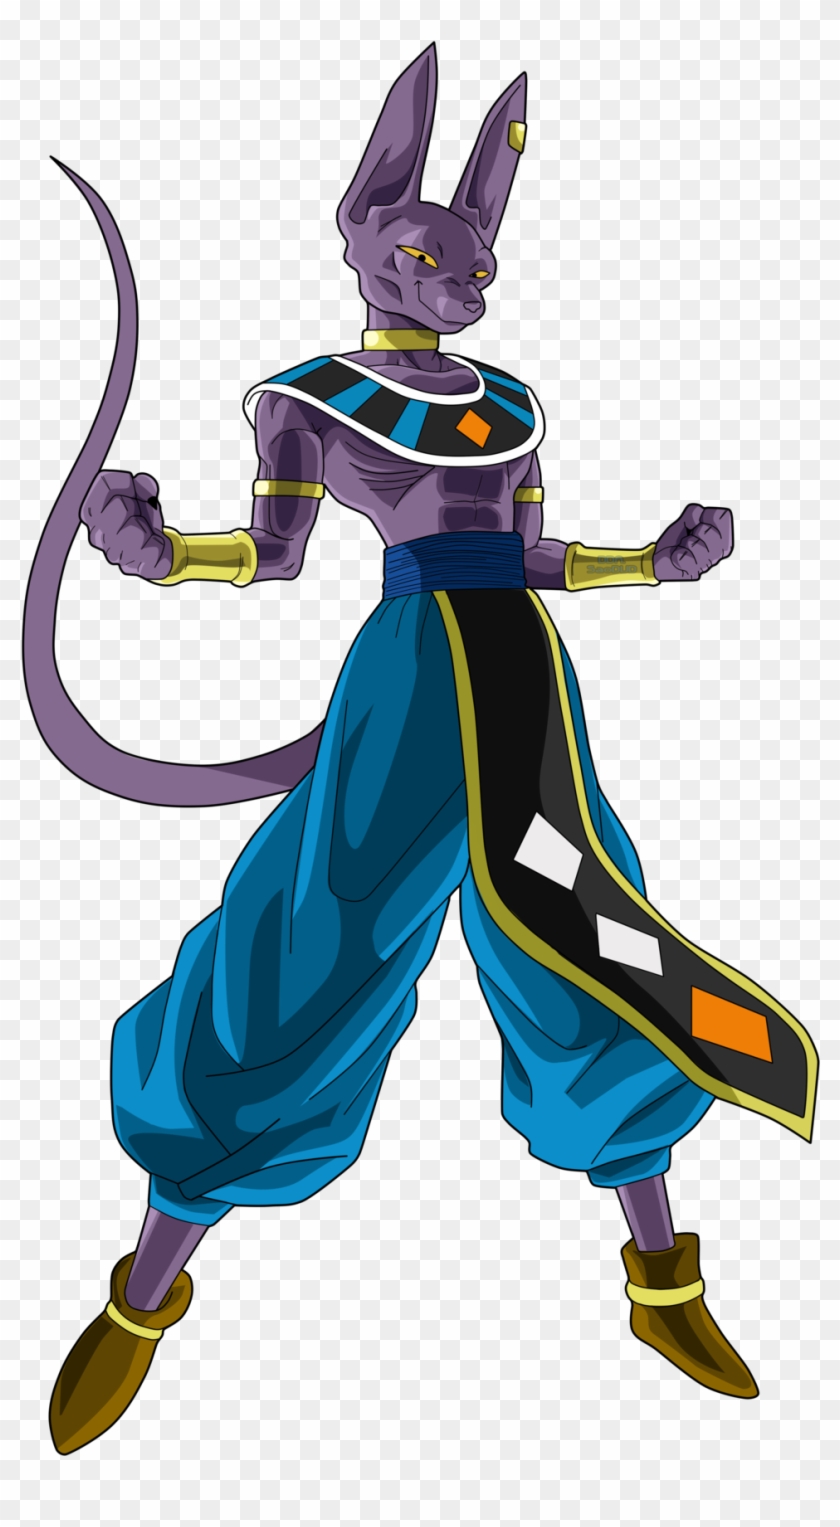 Arrogant Cartoon Characters Download - Goku Ui Vs Beerus - Free Transparent  PNG Clipart Images Download